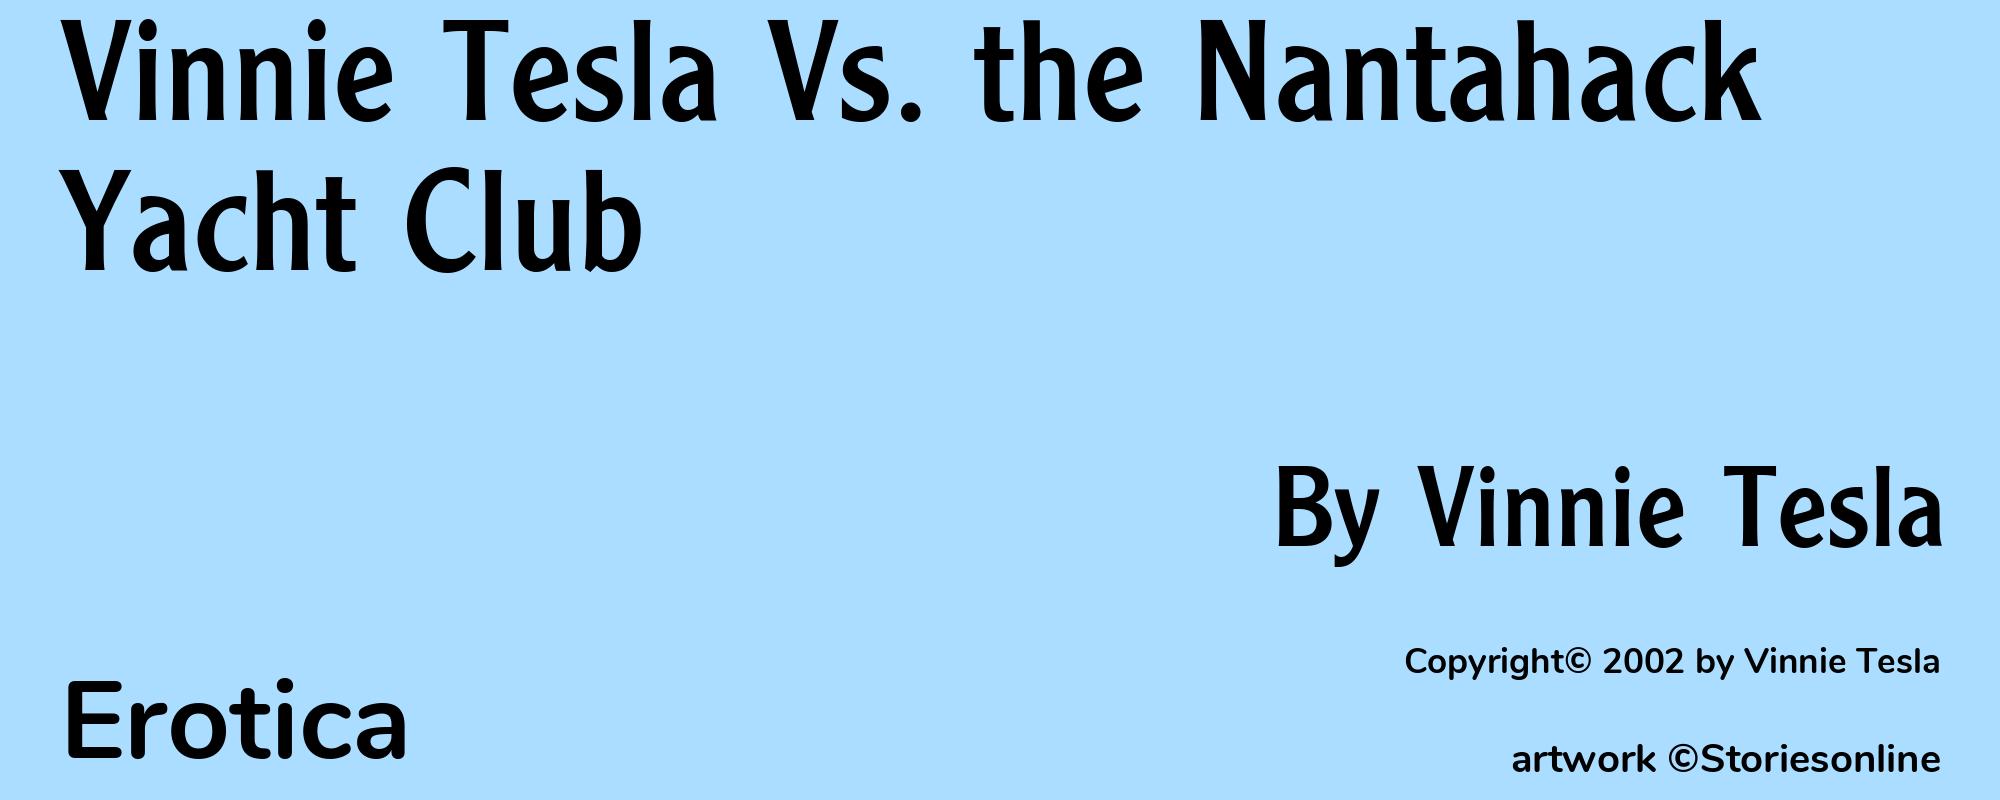 Vinnie Tesla Vs. the Nantahack Yacht Club - Cover